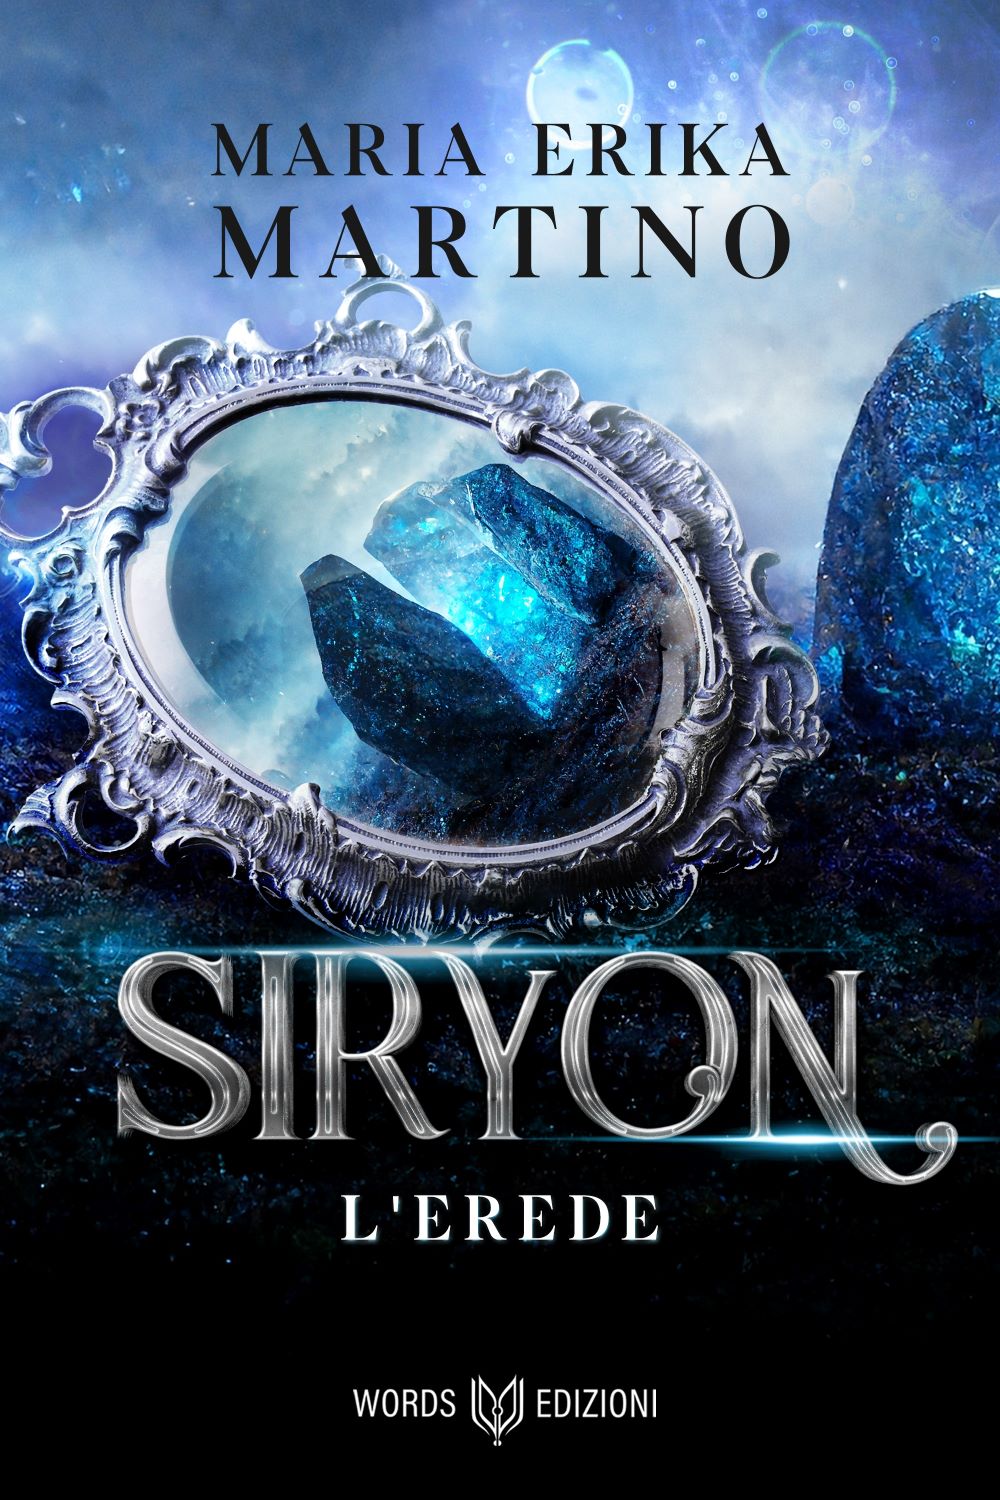 Segnalazione di uscita “Siryon – L’erede” di Maria Erika Martino